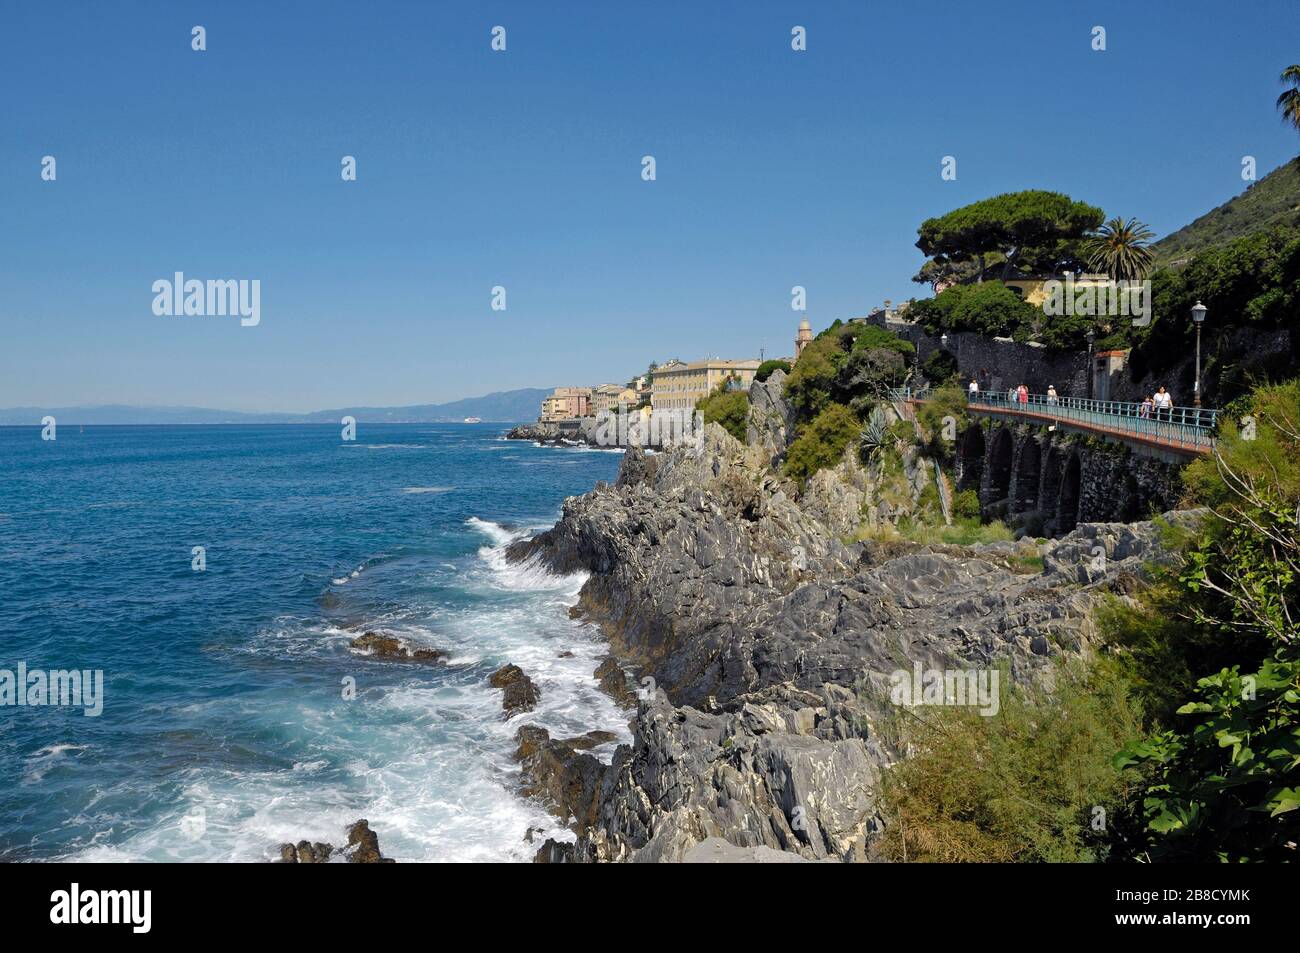 Anita Garibaldi path on the sea, Nervi, Ligury, Italy, Europe Stock Photo